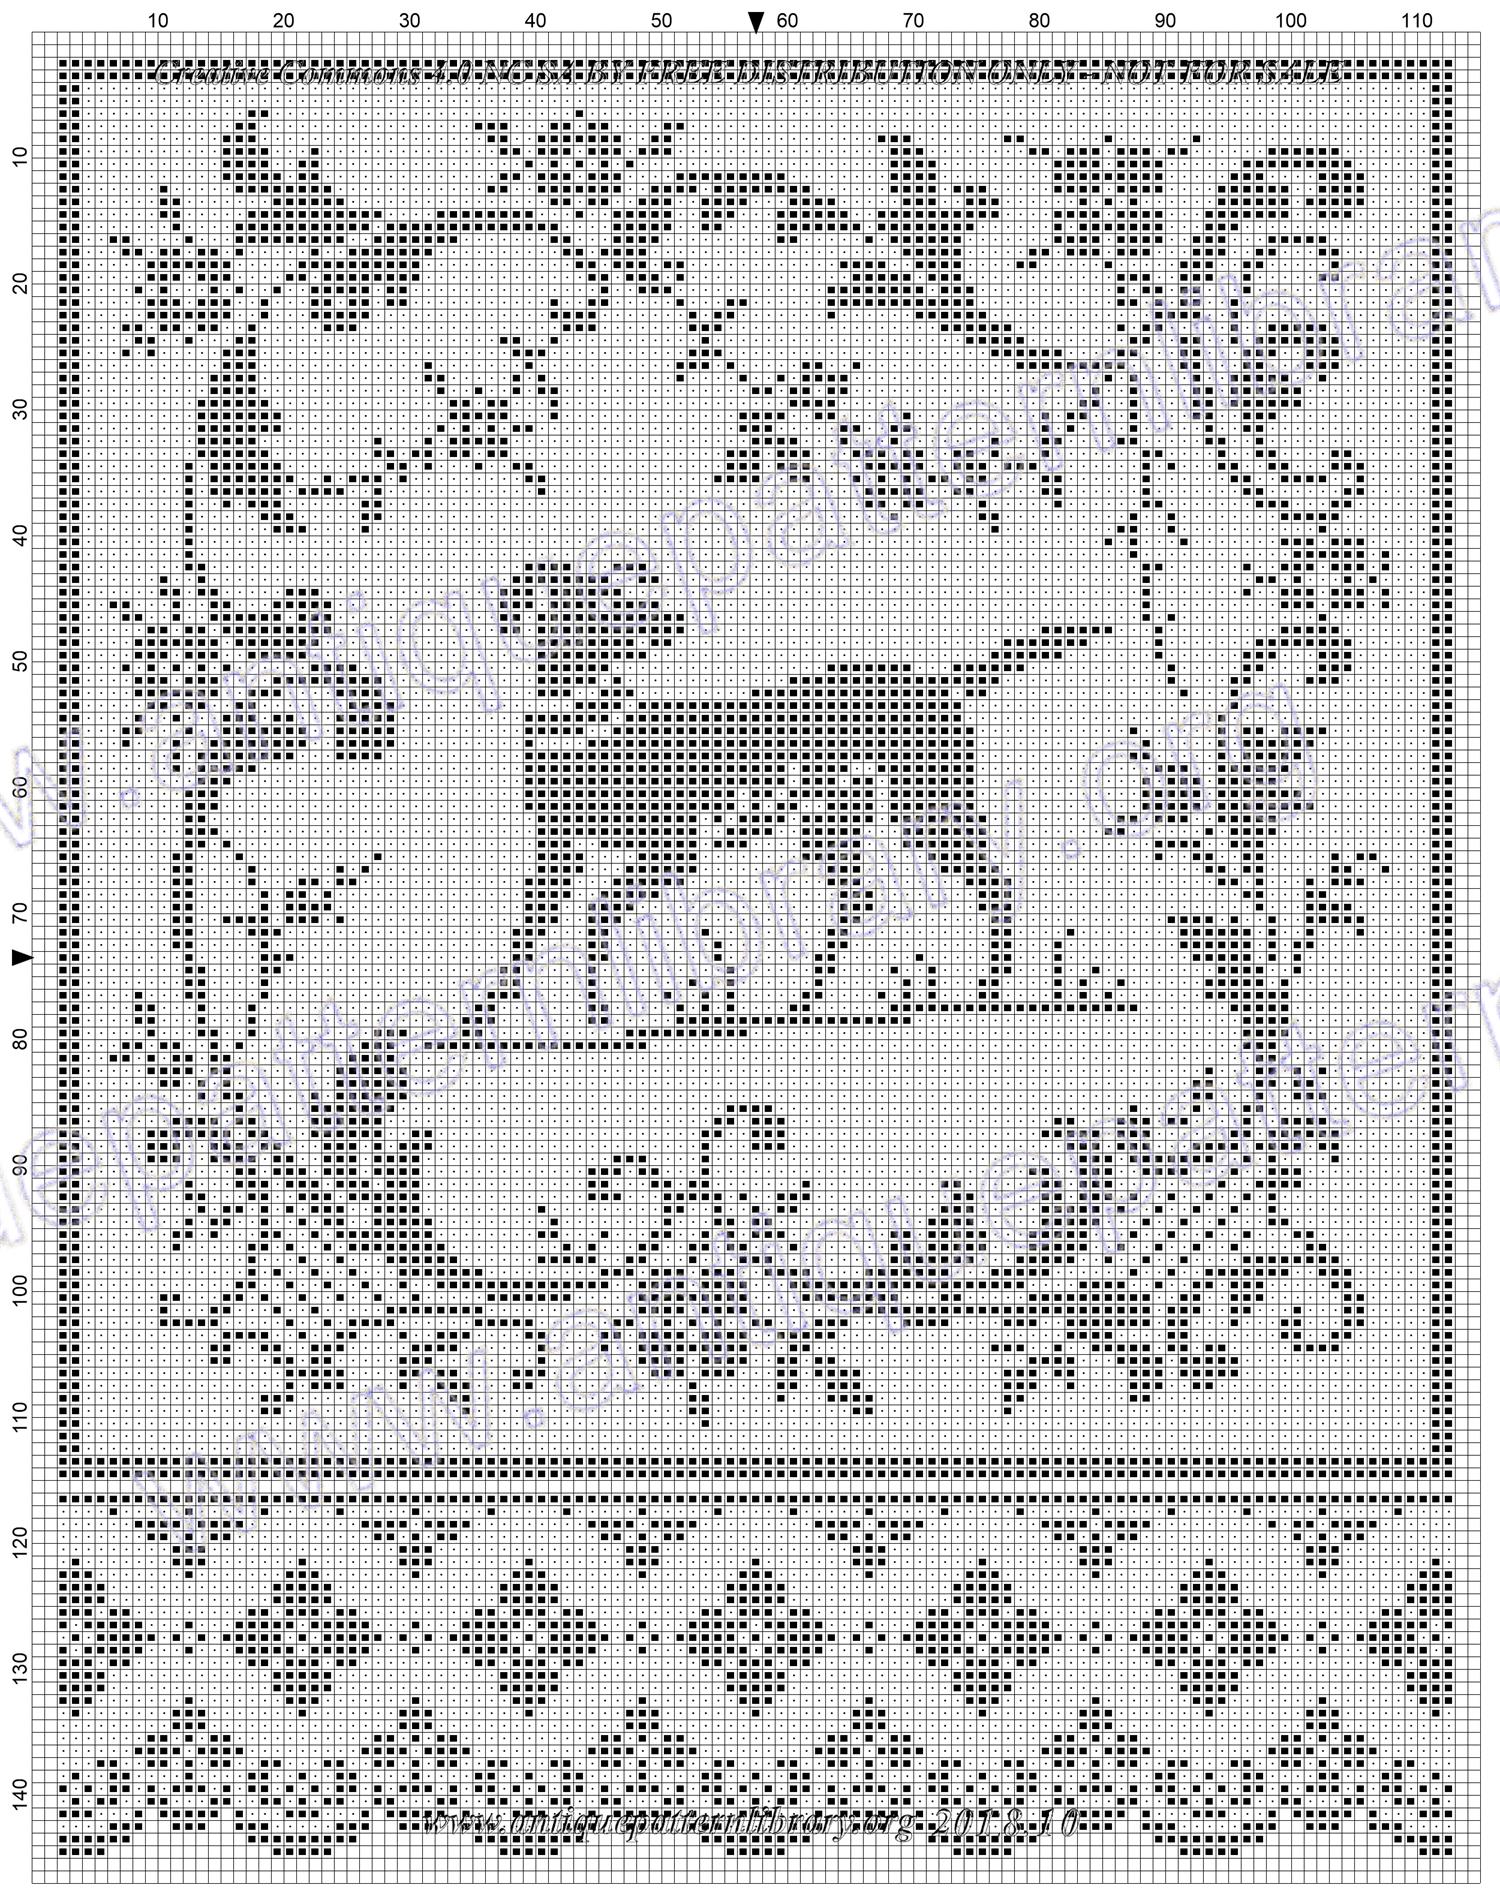 I-YS008 Filet pattern with dog